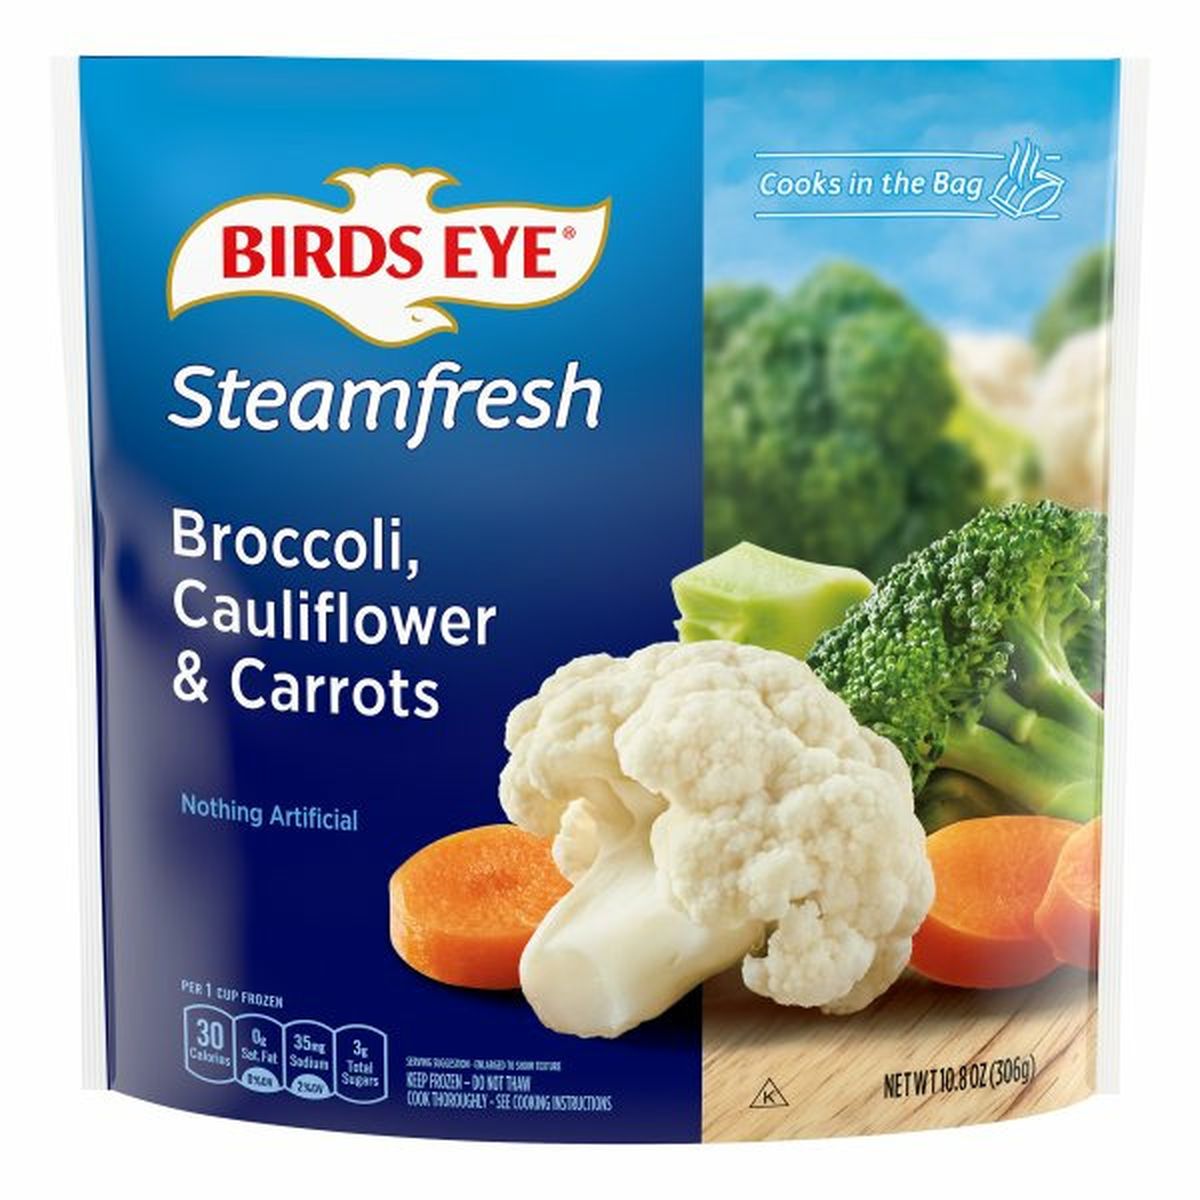 Calories in Birds Eye SteamFresh Broccoli, Cauliflower & Carrots